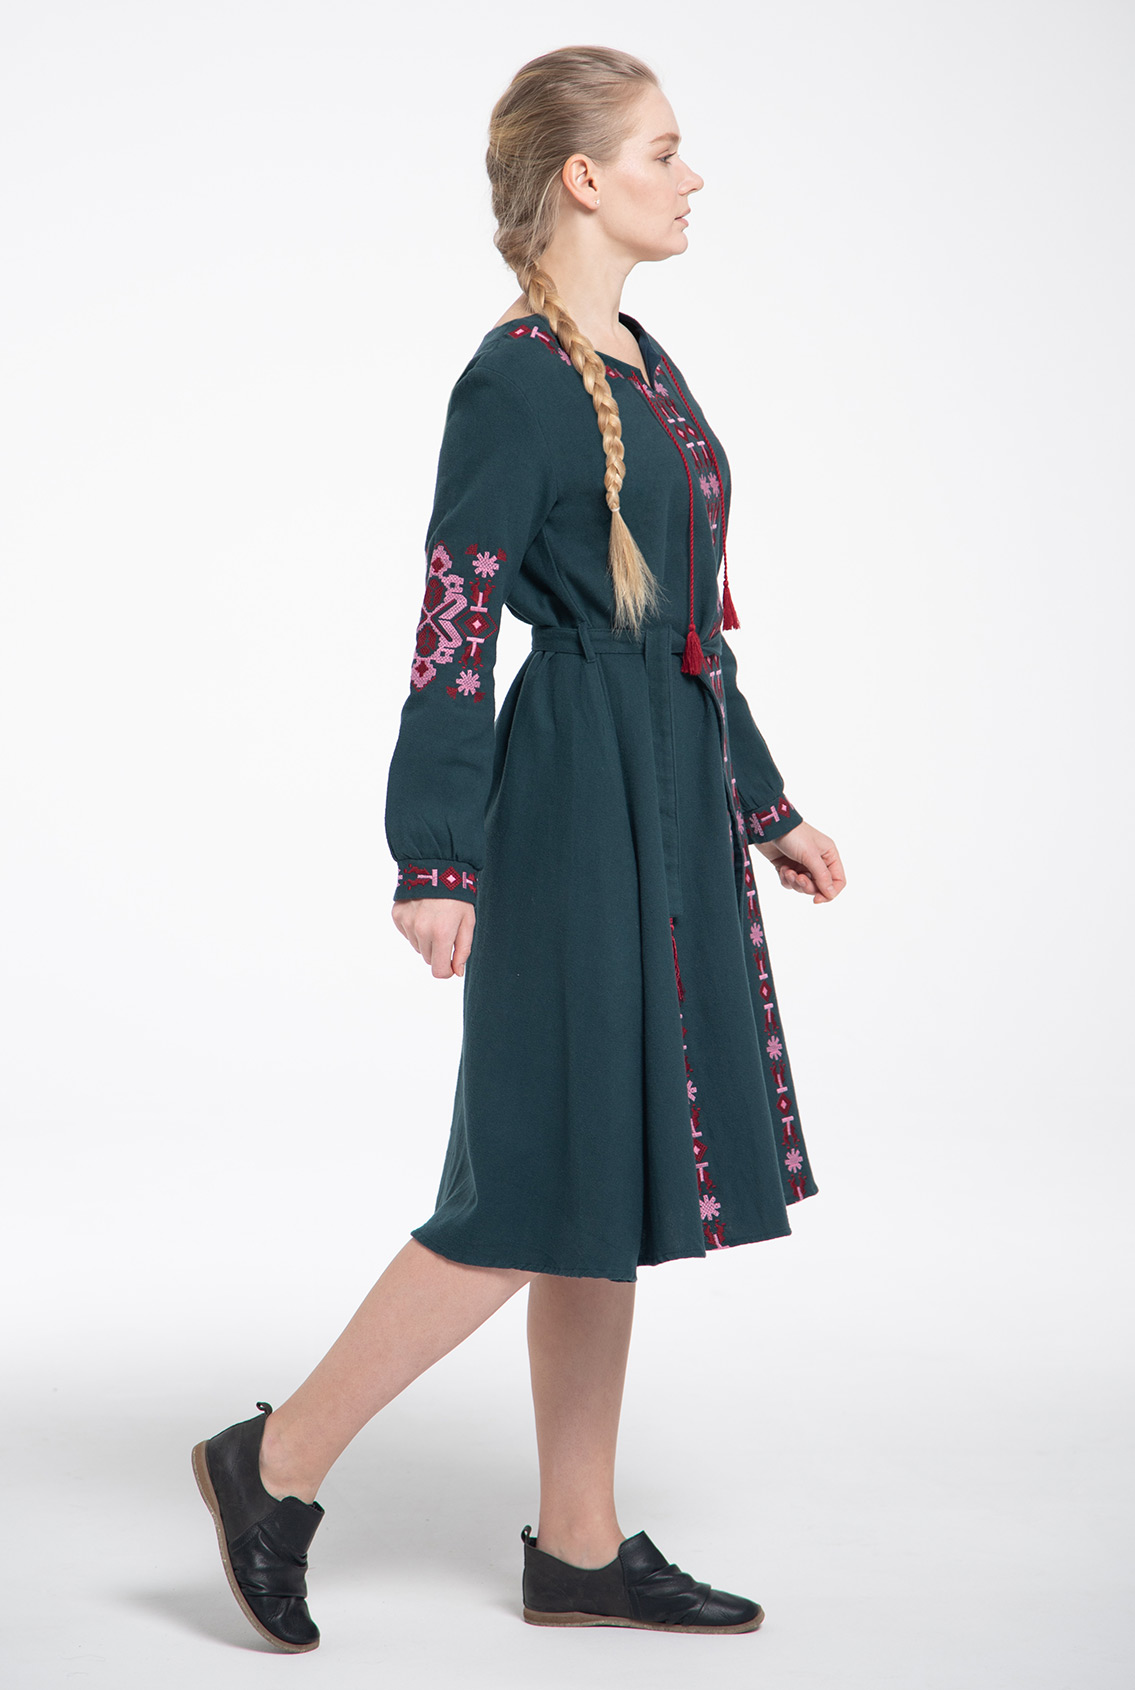 dress for orthodox